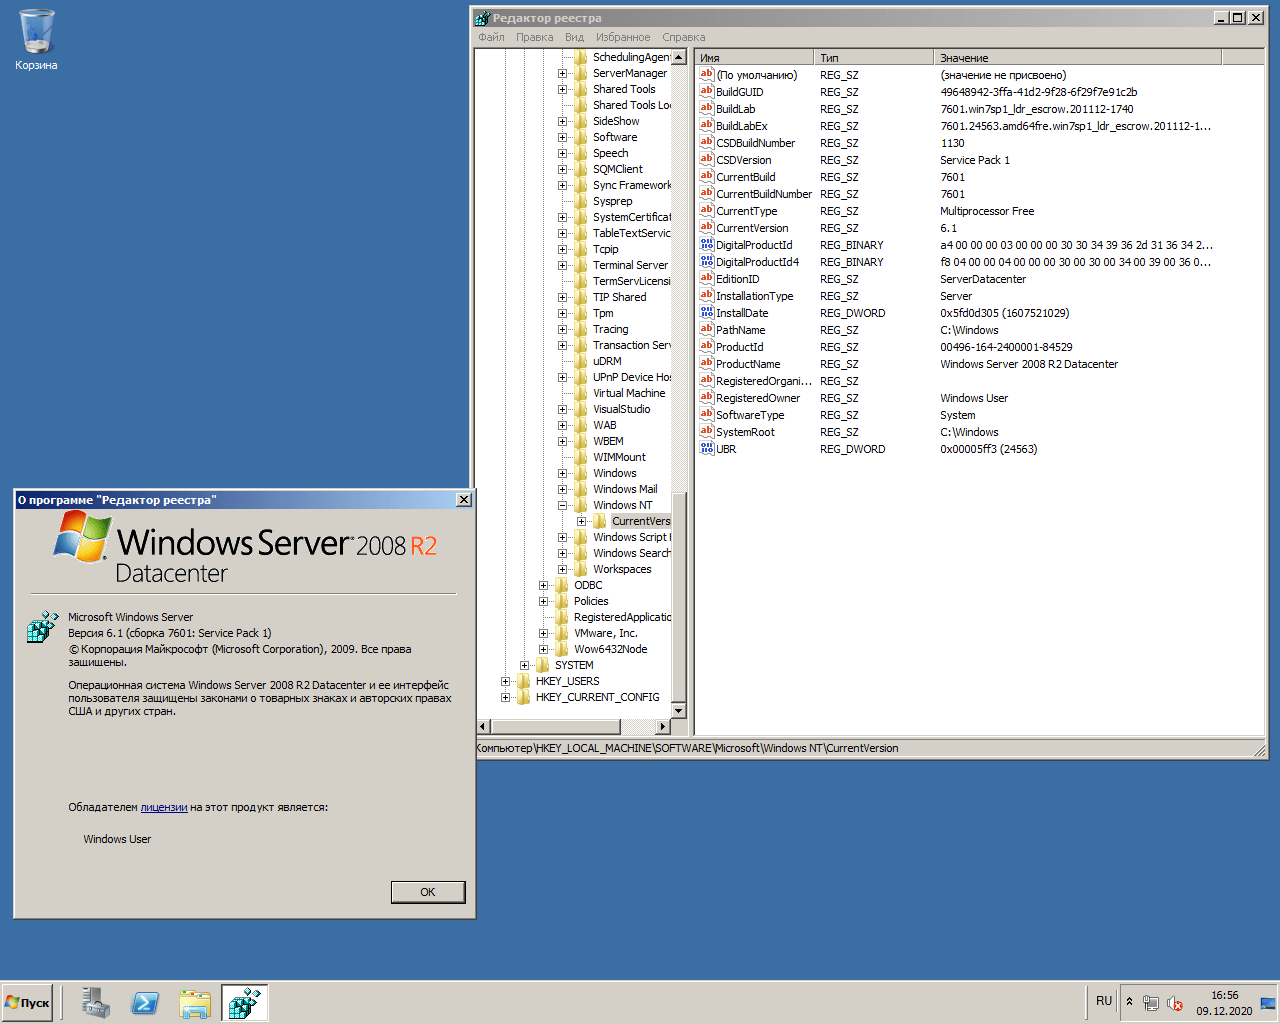 windows server 2008 r2 x64 sp1 torrent